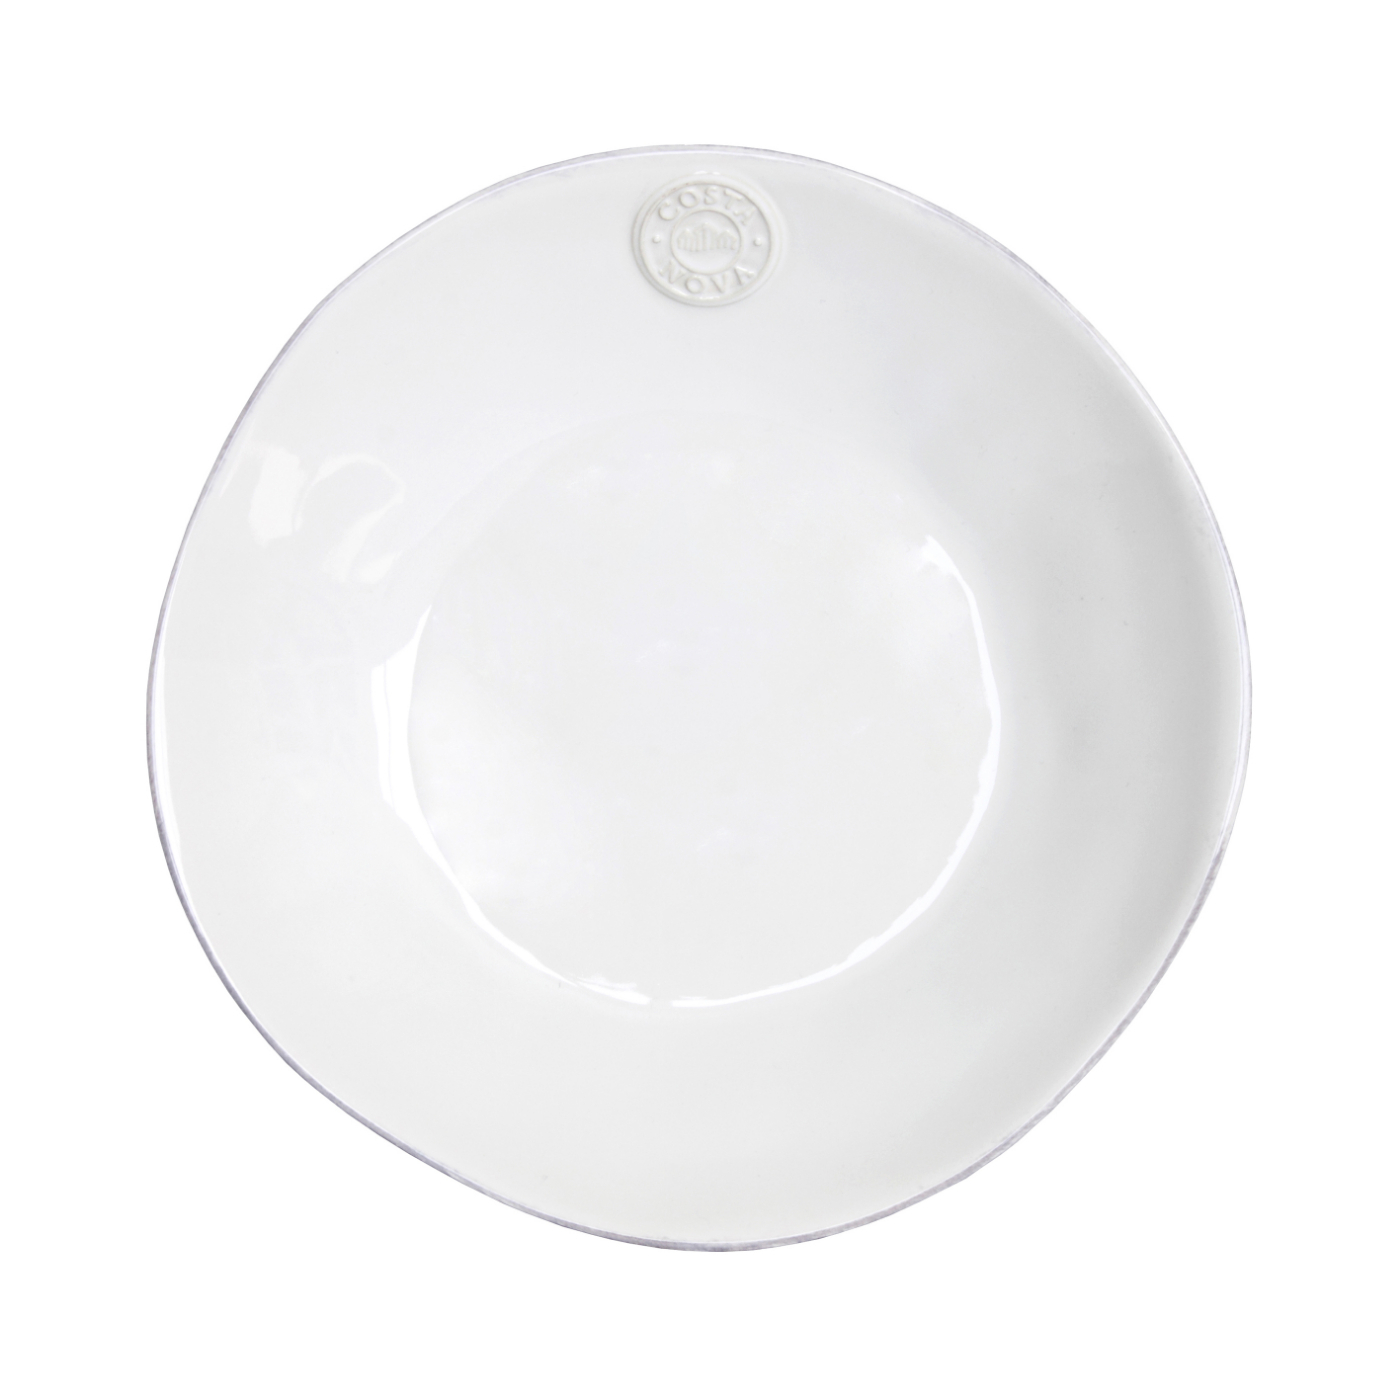 Costa nova white. Посуда Португалия Costa Nova. Ceramic Nova 5020. Суп в белой тарелке. Тарелка диаметром 25 см.